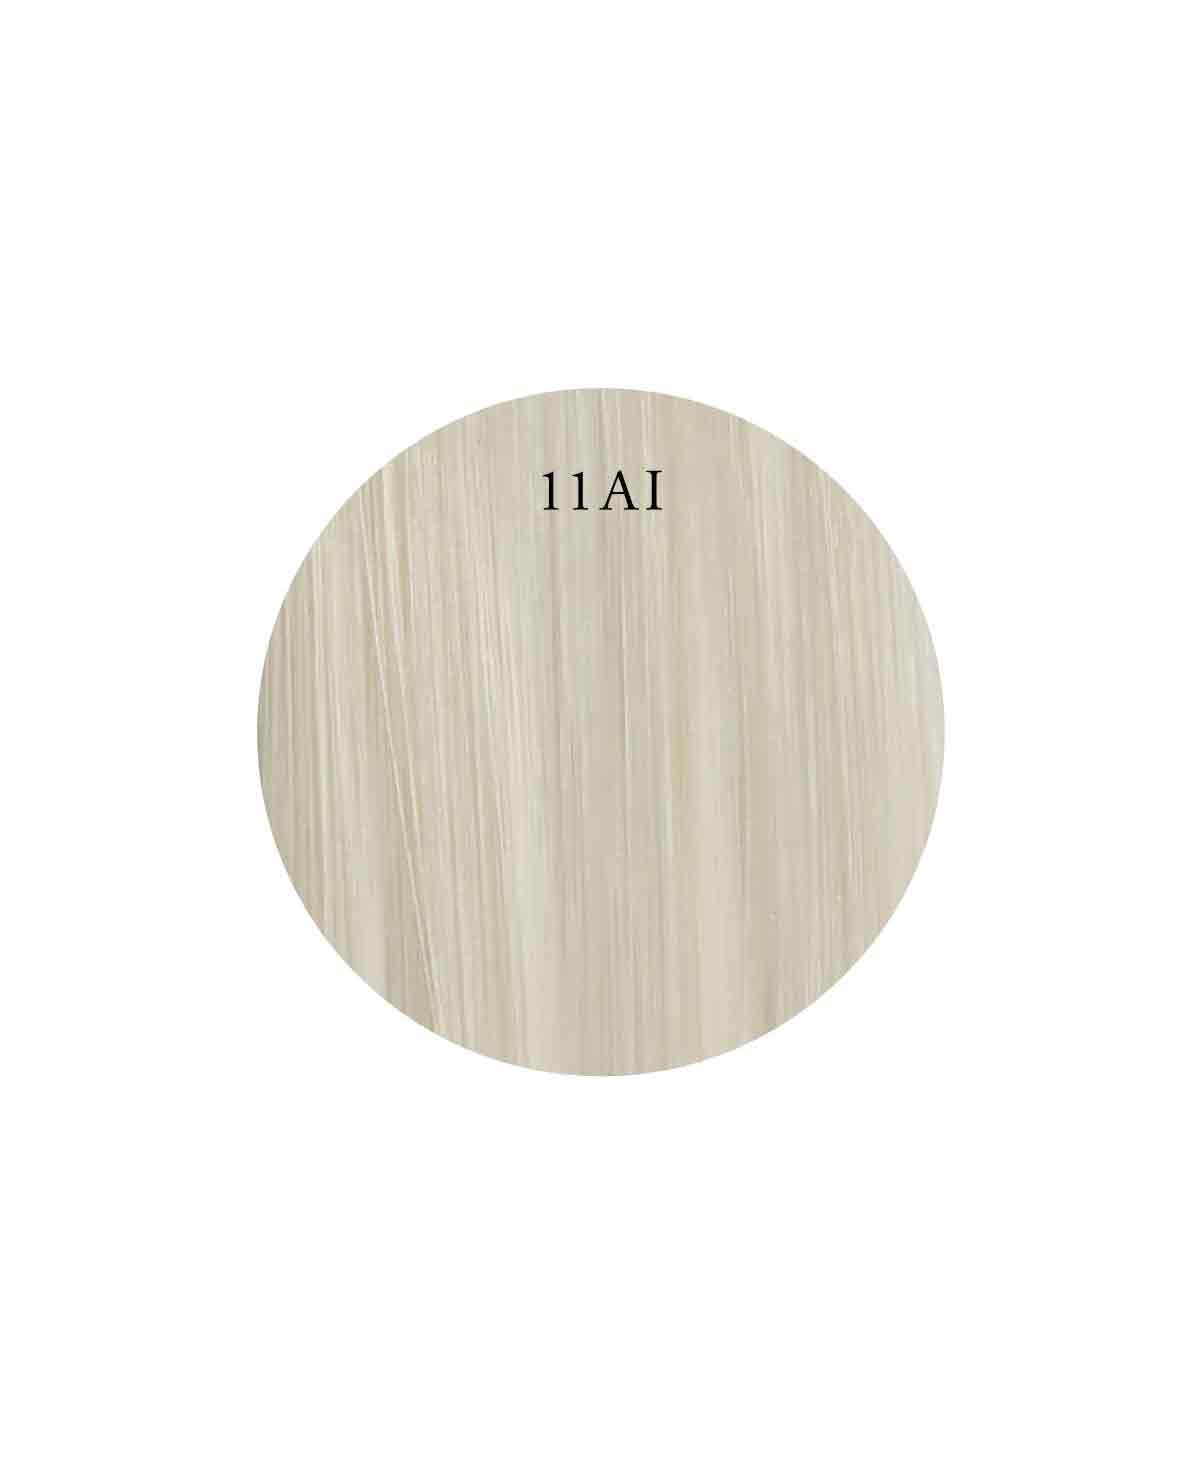 30-35cm (14") TAPE HAIR EXTENSIONS - WHITE BLONDE - 11AI